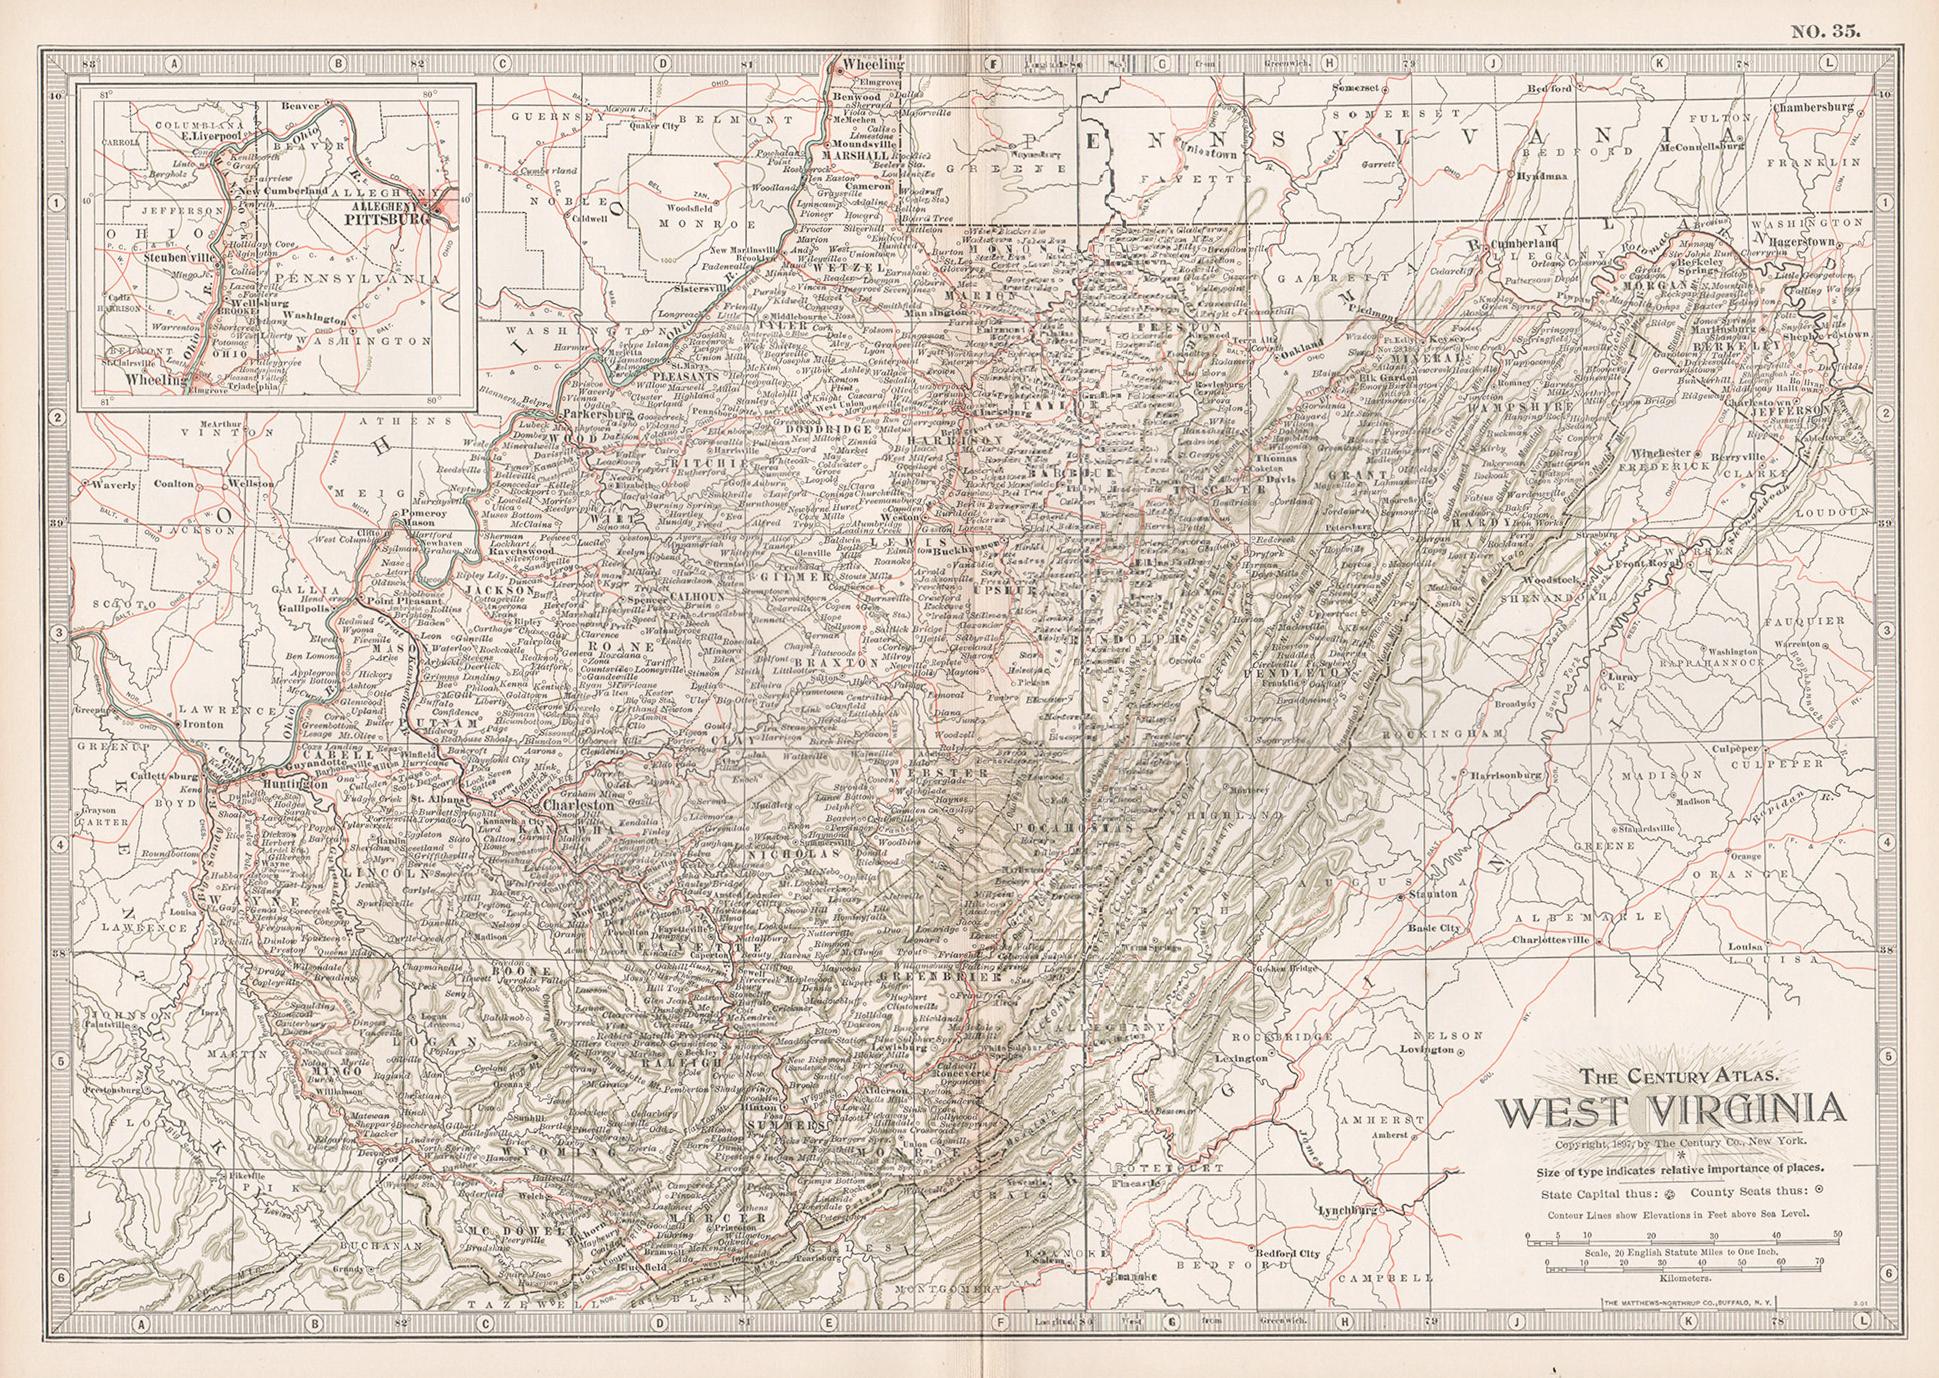 West Virginia. USA. Century Atlas state antique vintage map